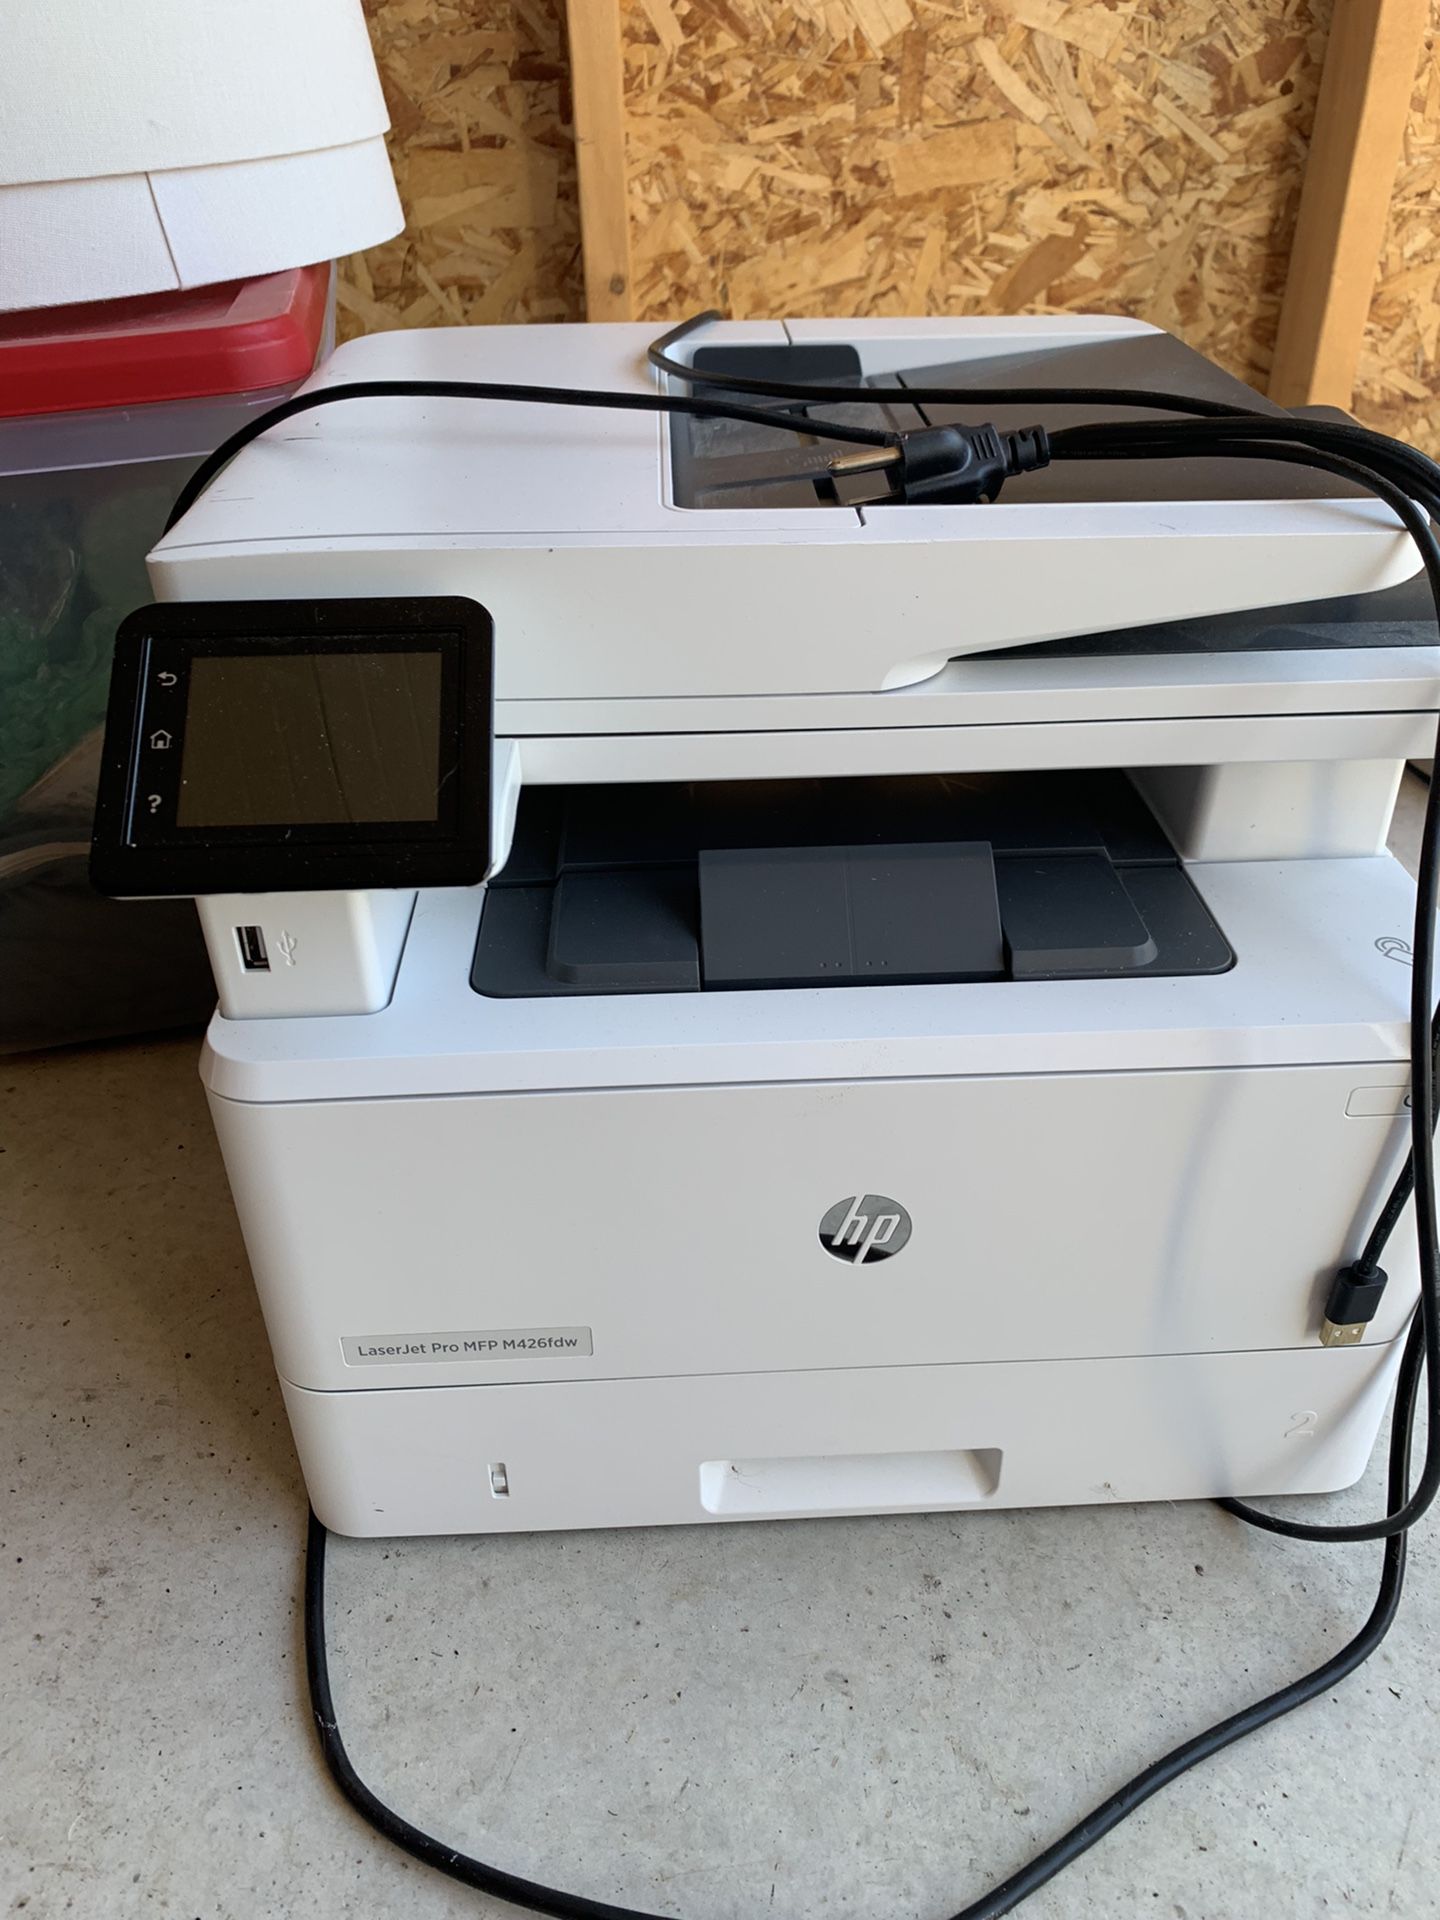 HP Multi Function Printer m426fdw